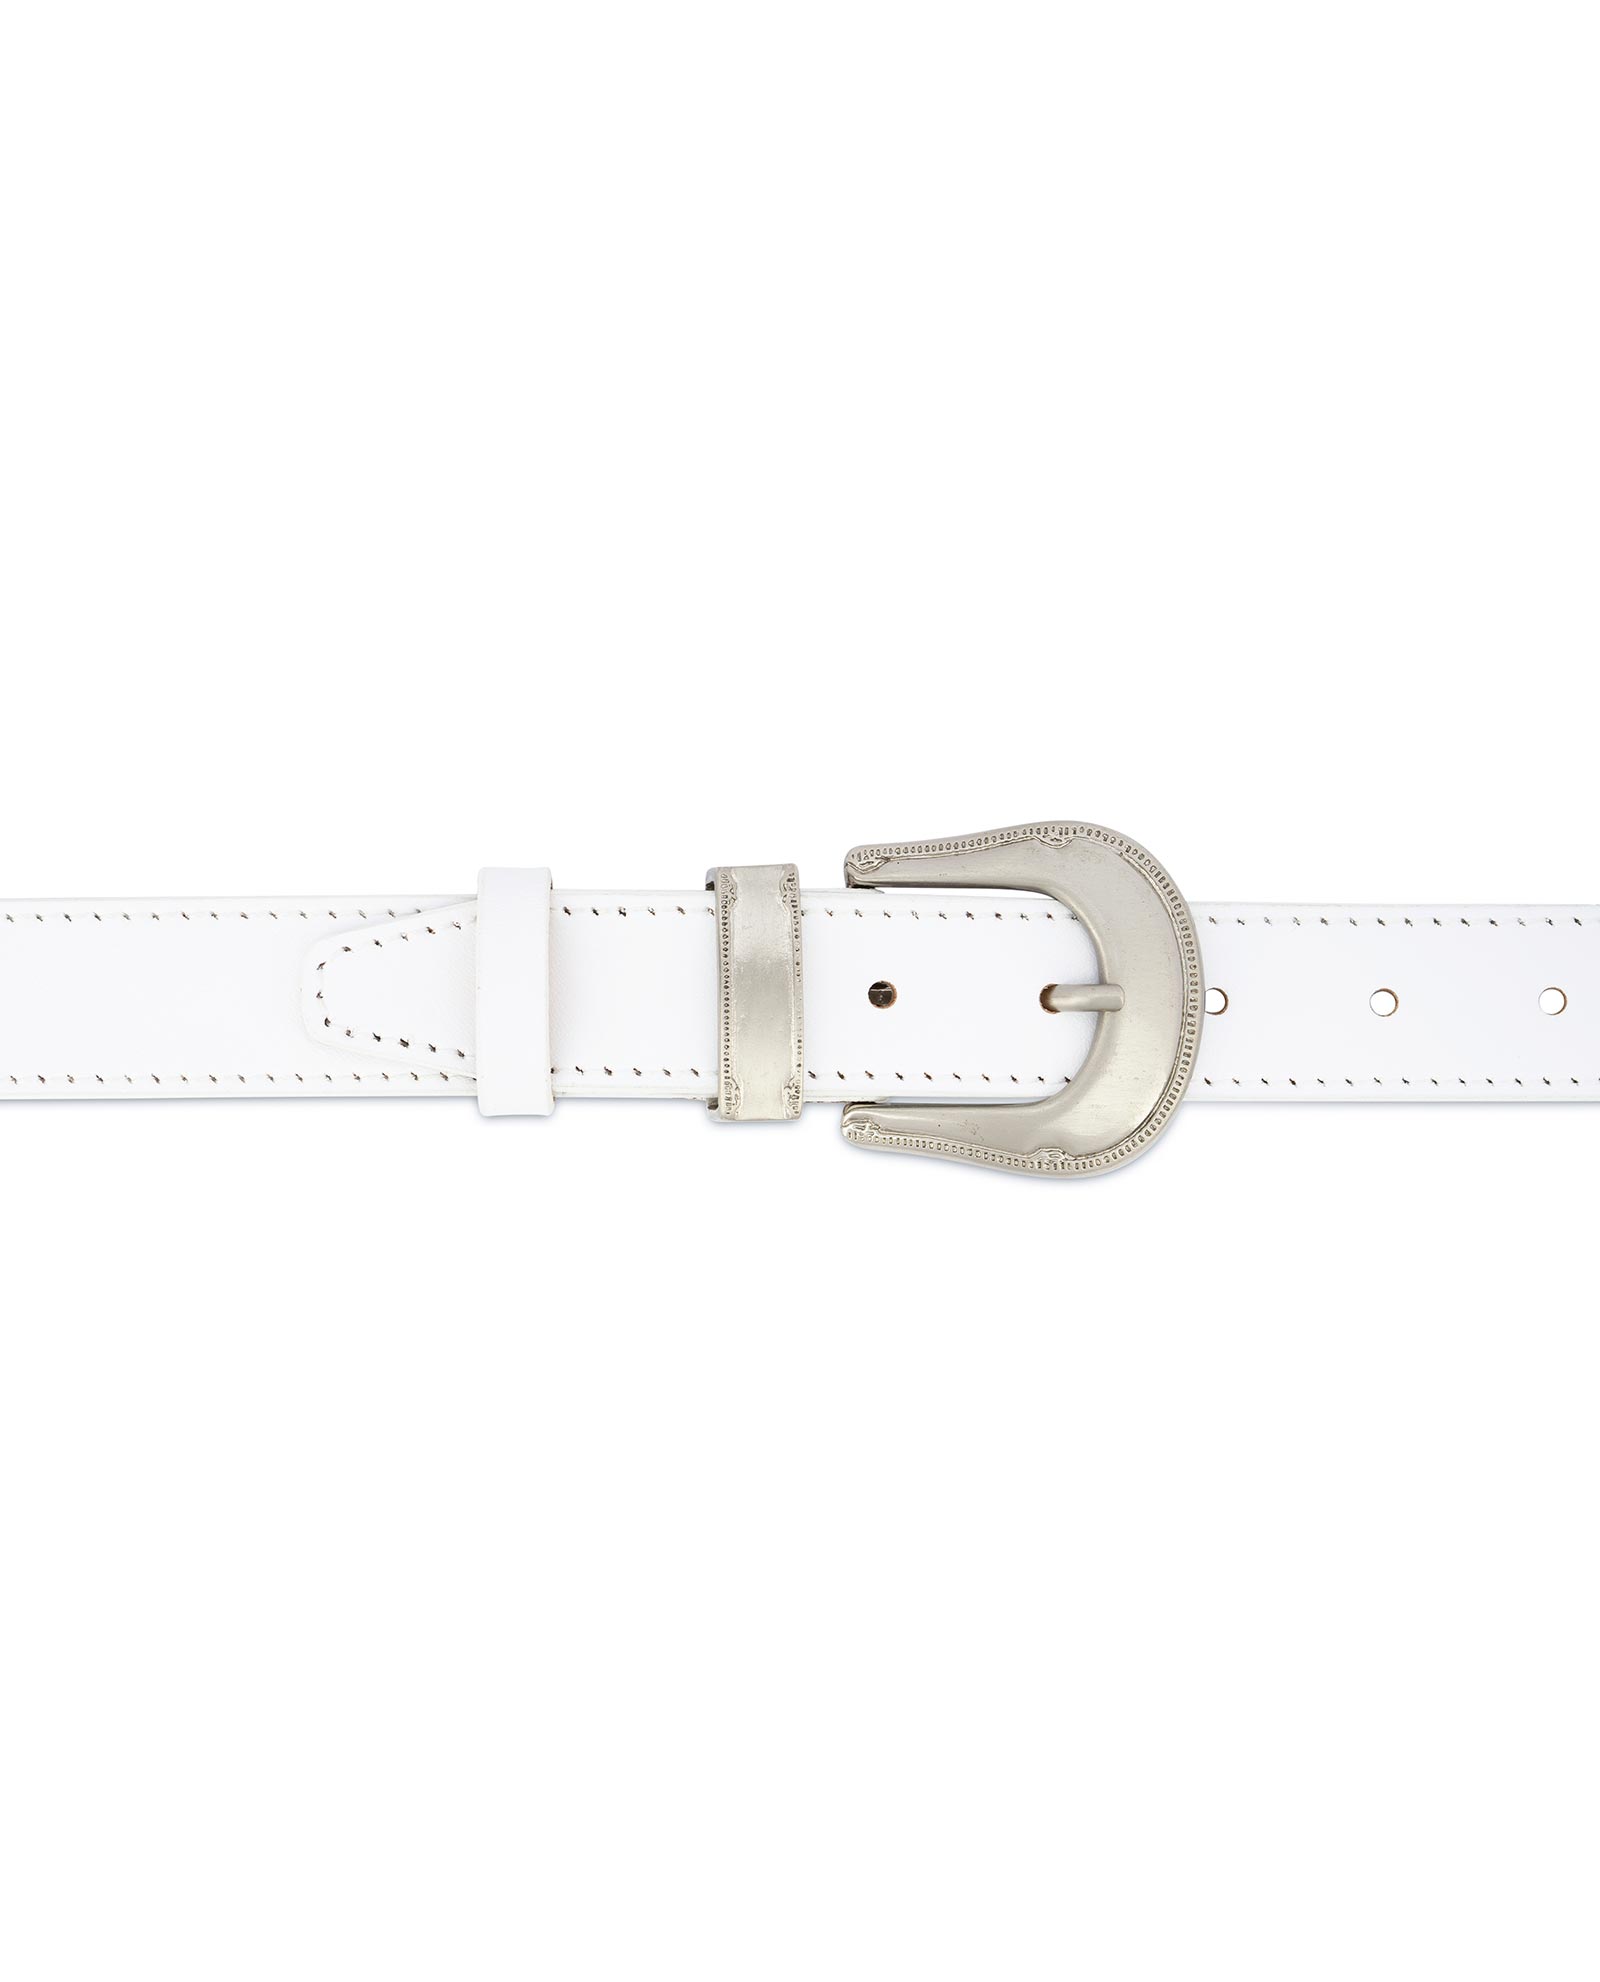 Buy White Western Belt for Women | LeatherBeltsOnline.com